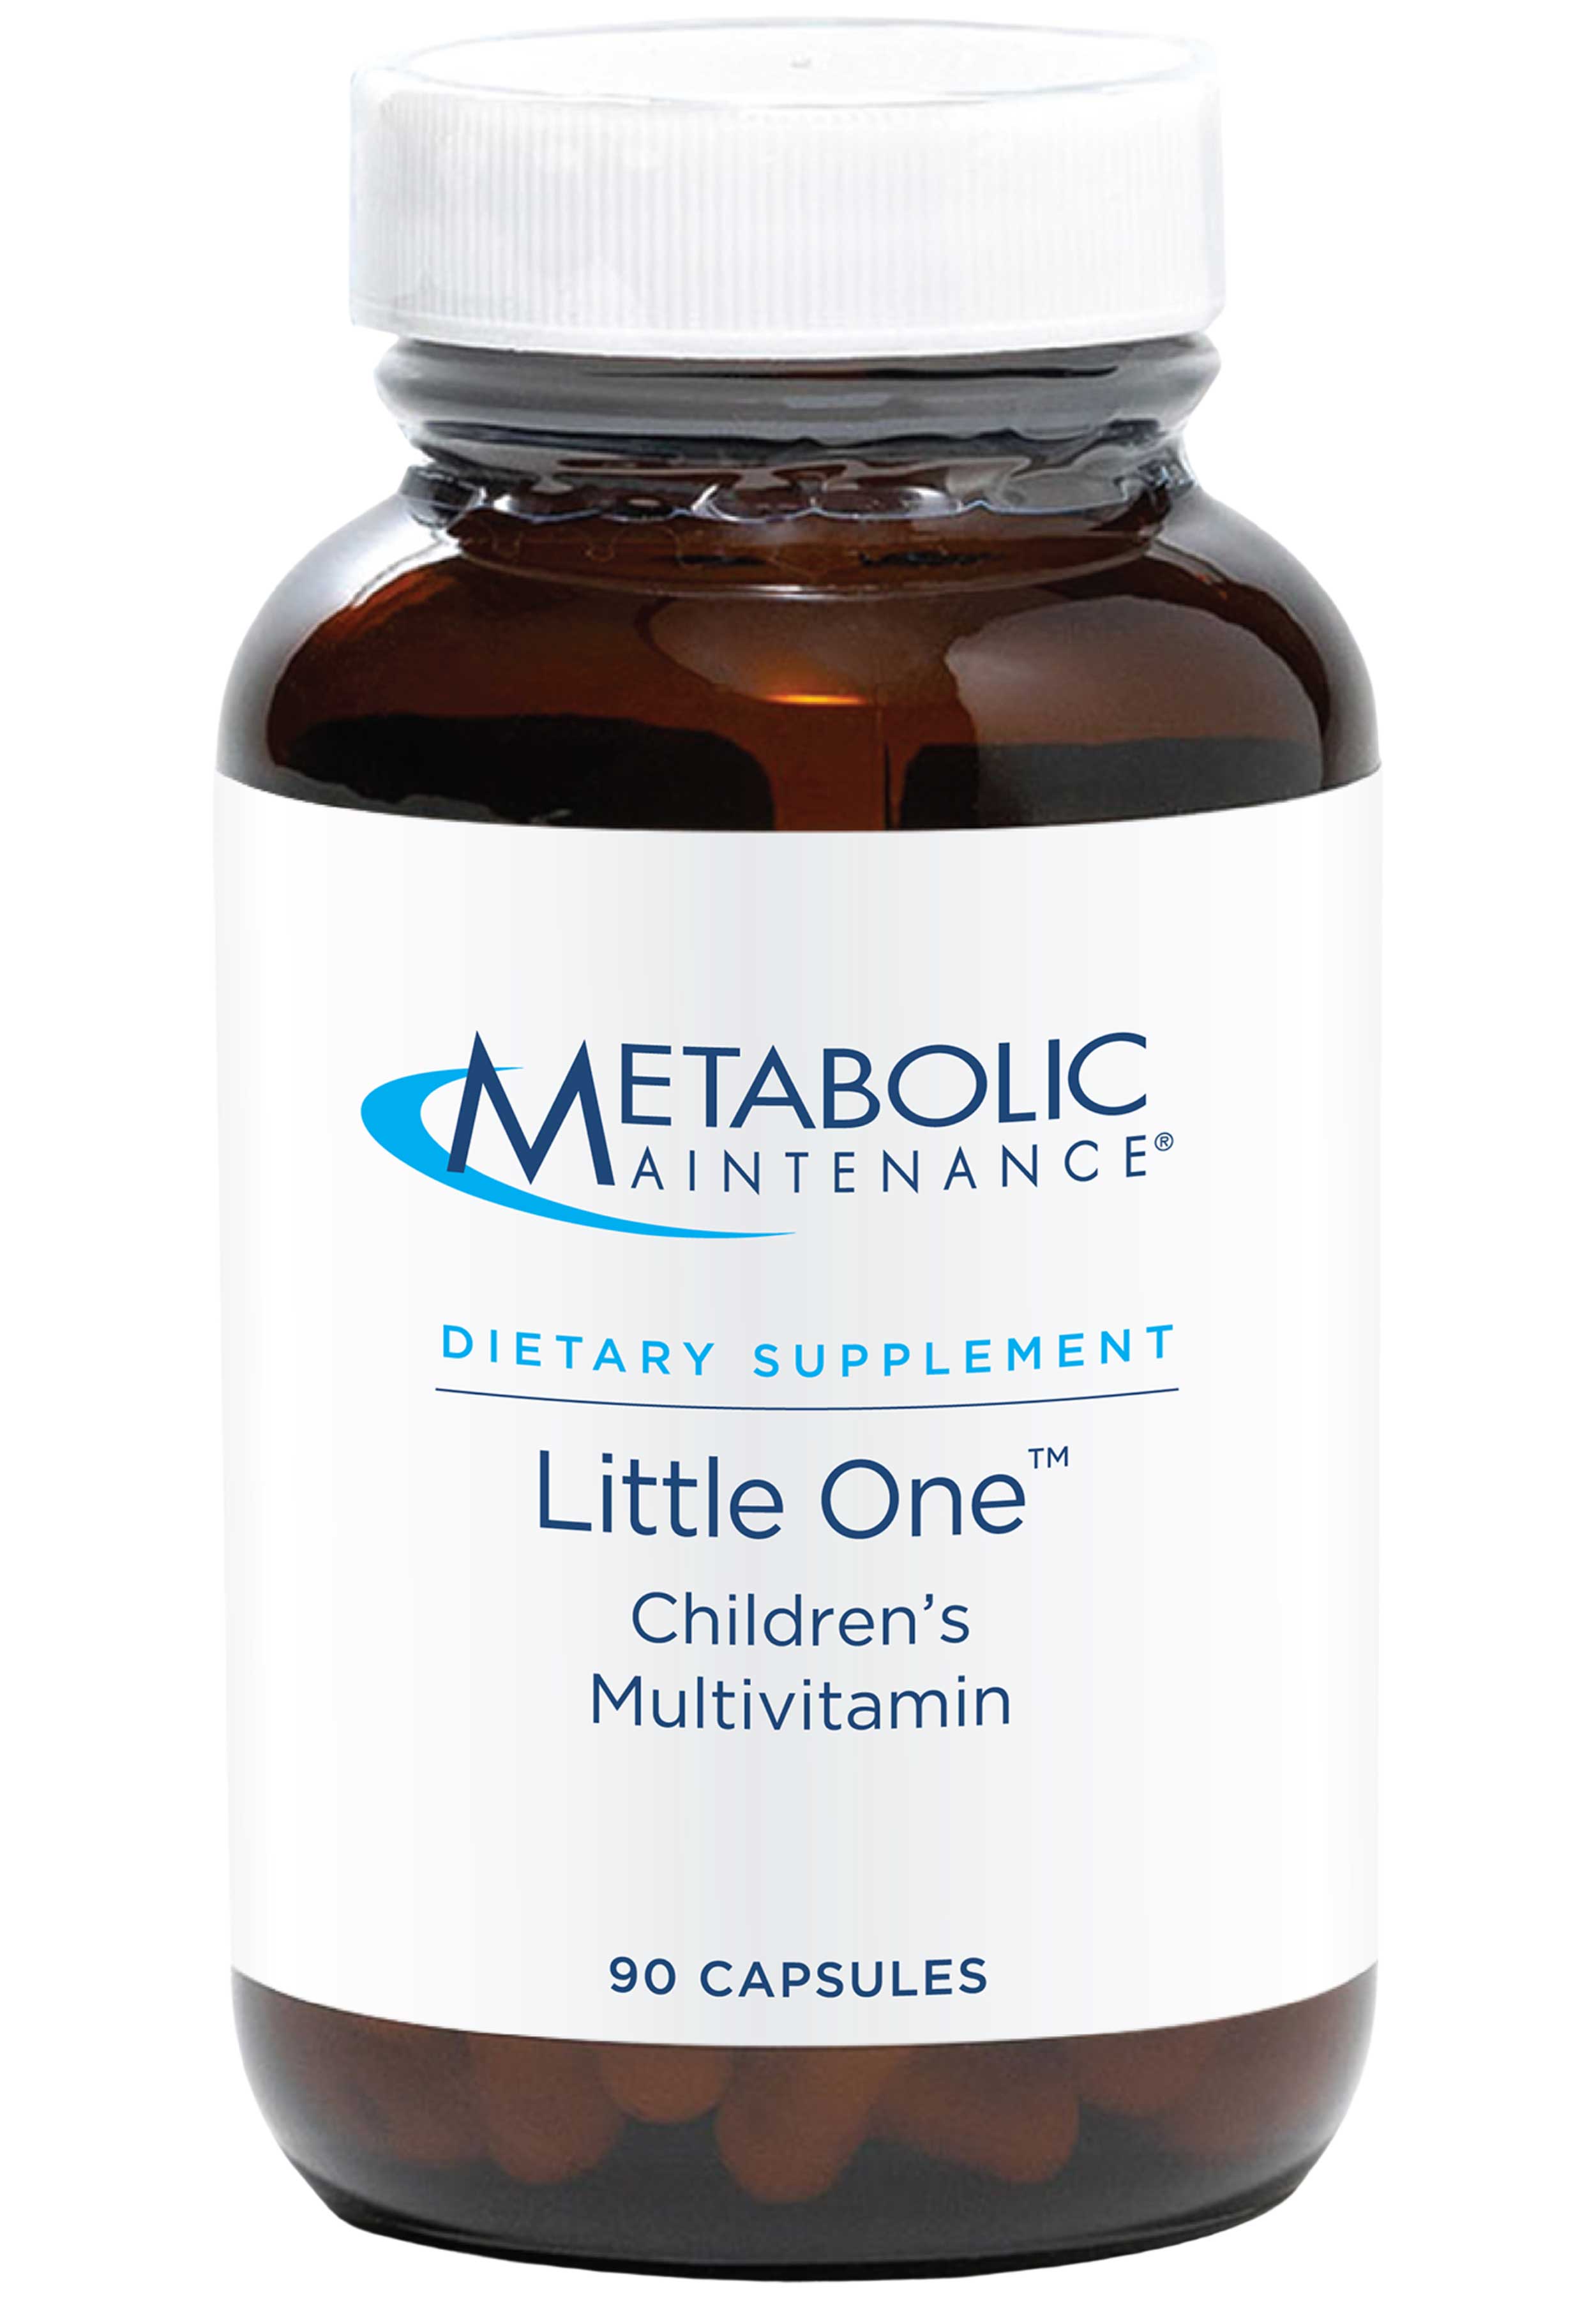 Metabolic Maintenance Little One Children's Multivitamin